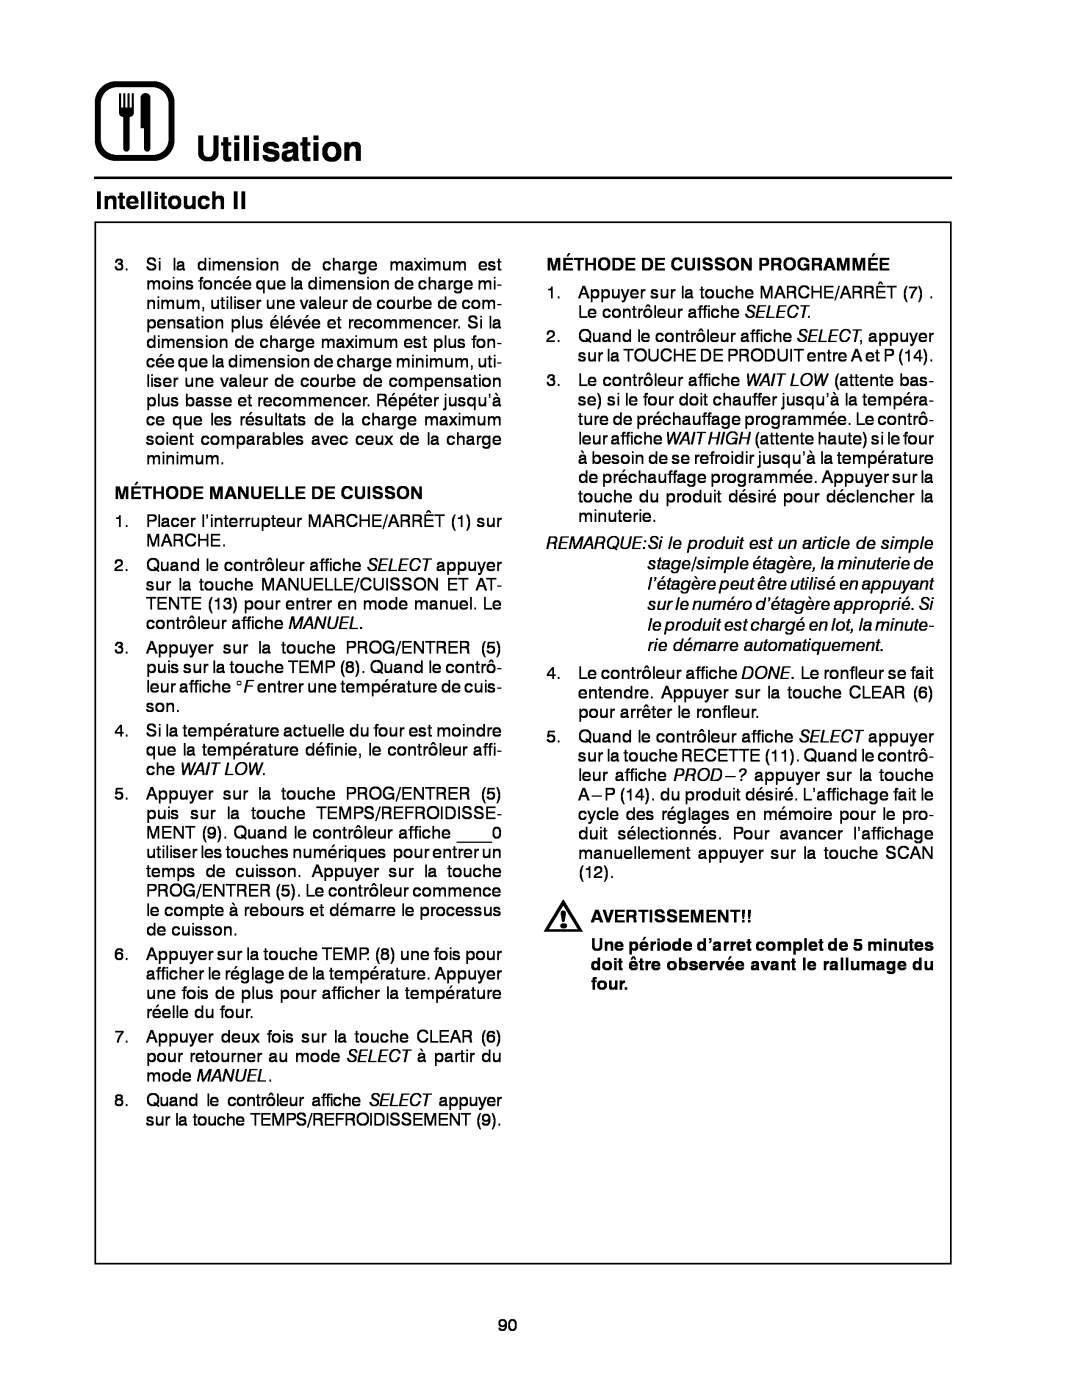 Blodgett DFG-200 Utilisation, Intellitouch, Méthode Manuelle De Cuisson, Méthode De Cuisson Programmée, Avertissement 